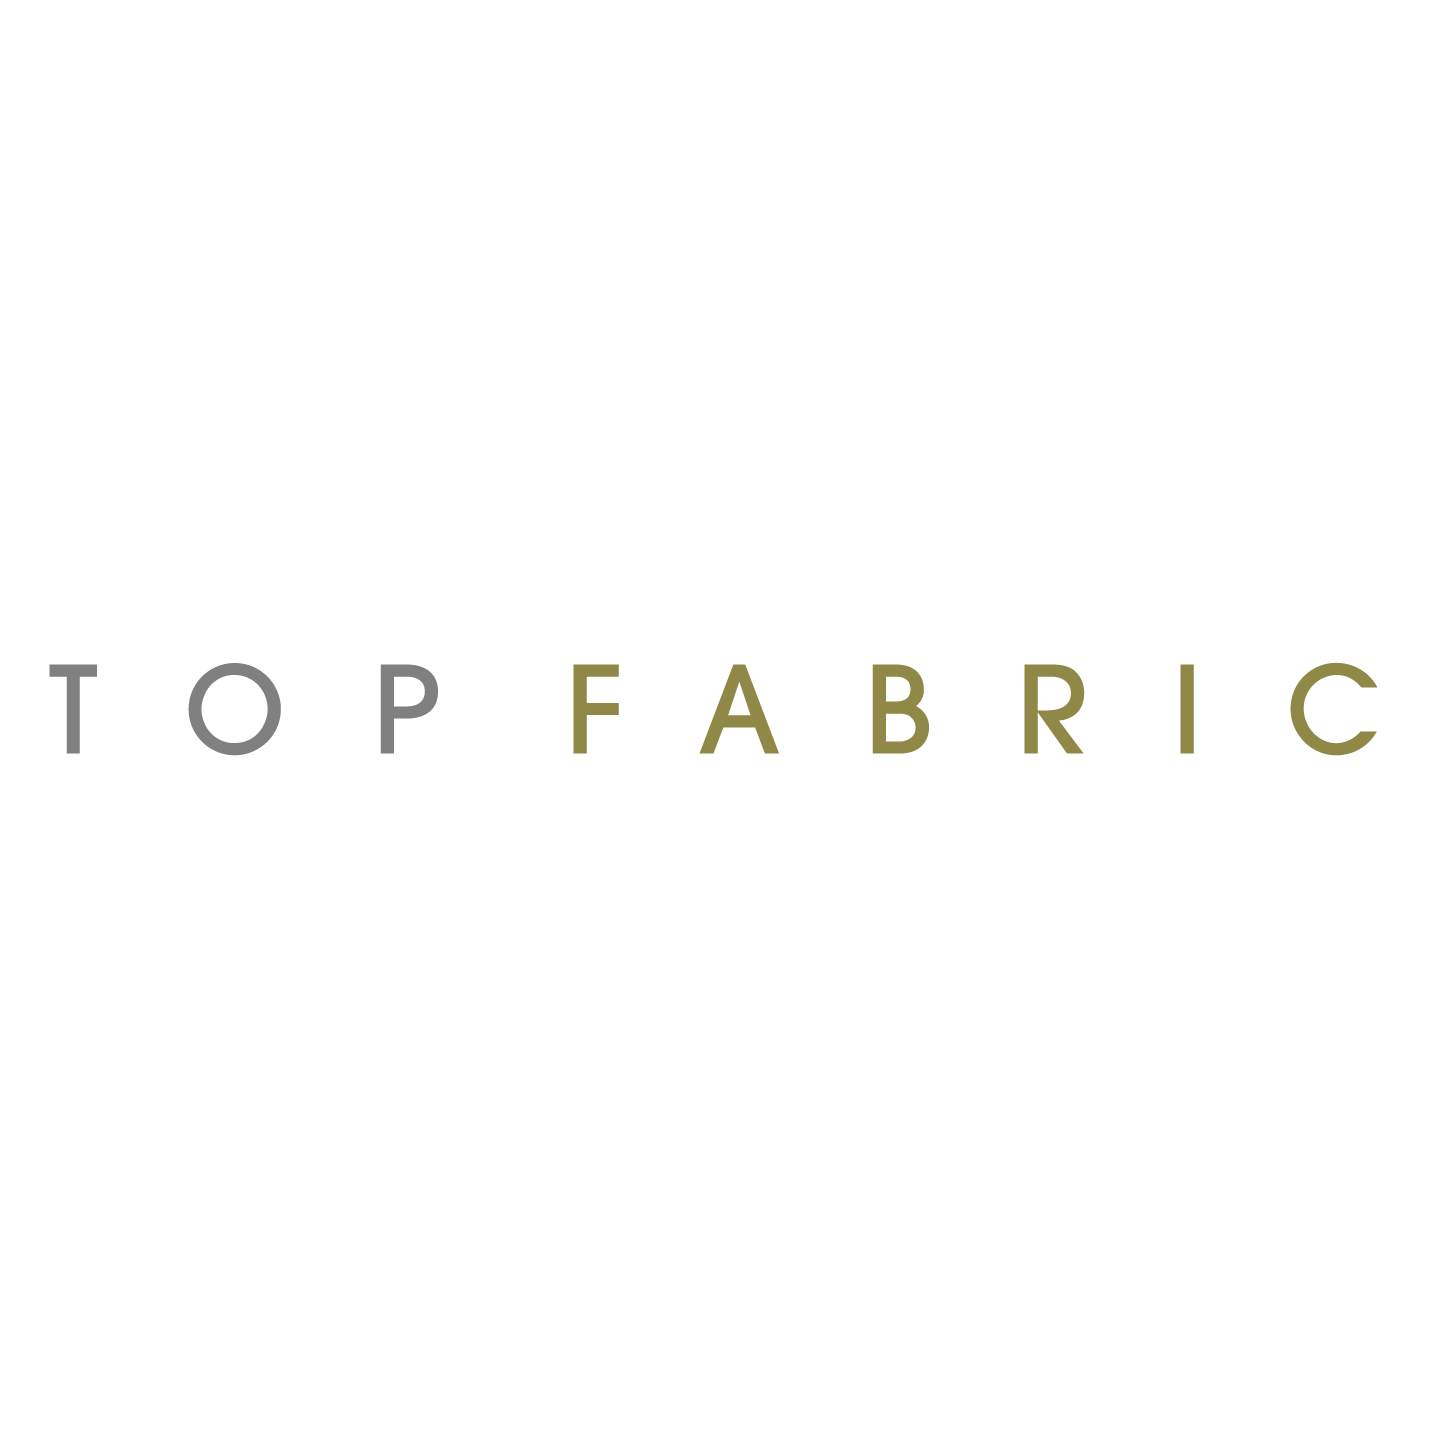 Buy fabric online - silk, chiffon, embellished, tiny, micro ...